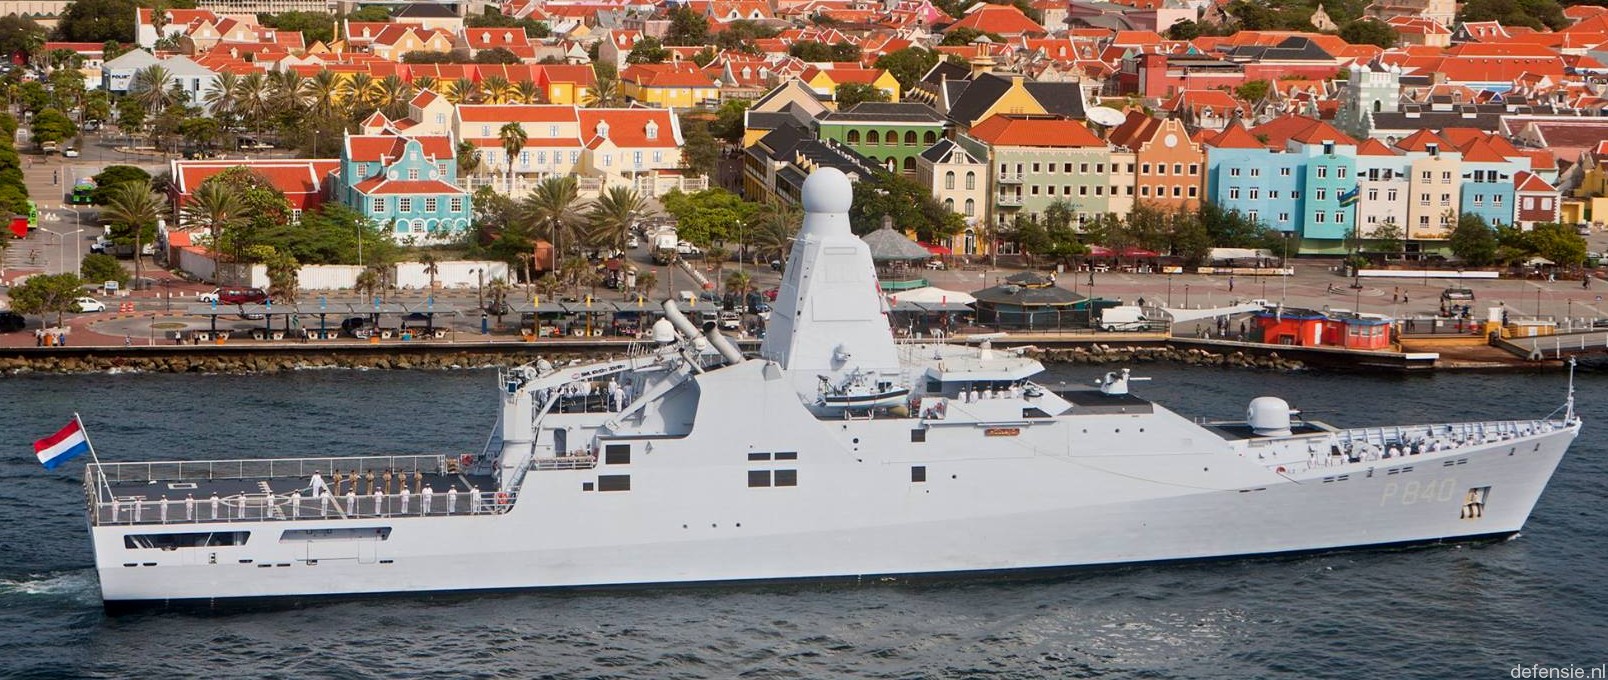 p-840 hnlms holland offshore patrol vessel opv royal netherlands navy 17